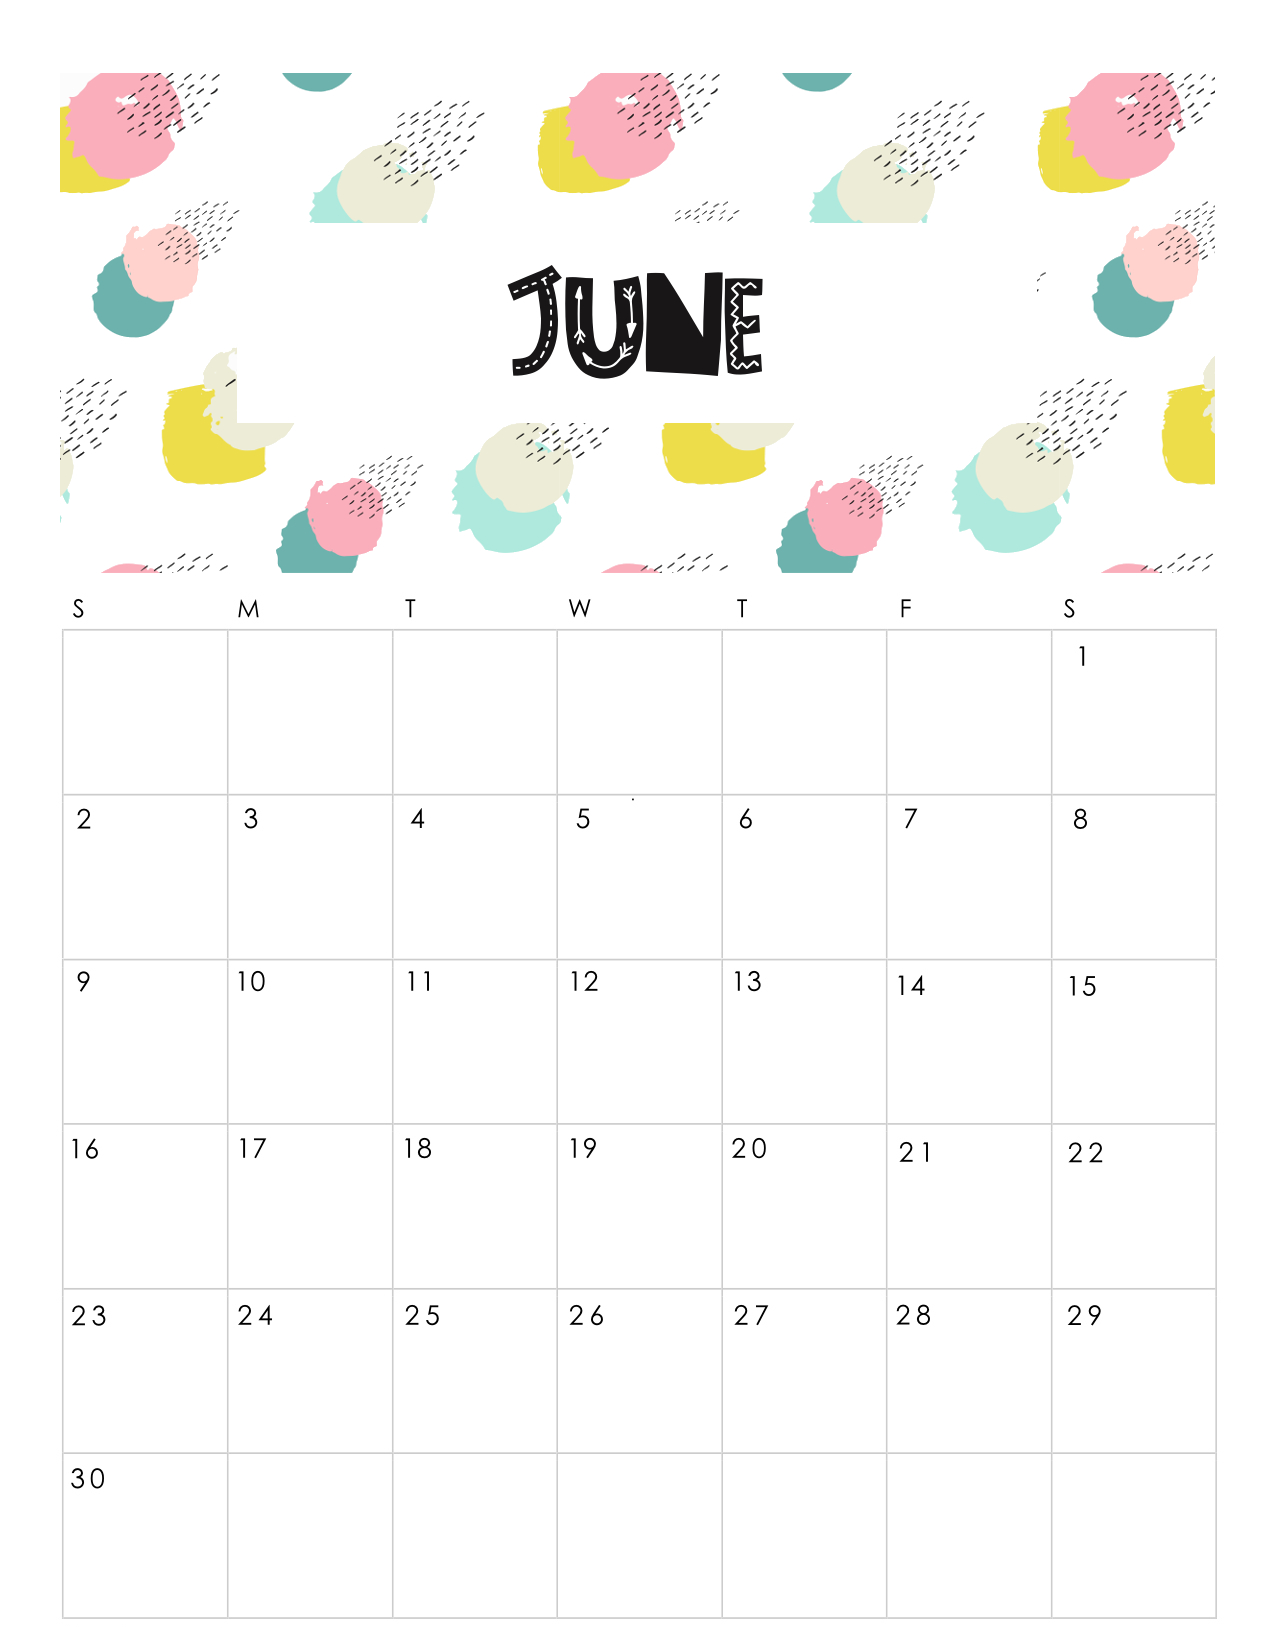 free-printable-abstract-patterned-calendar-2019-june.jpg